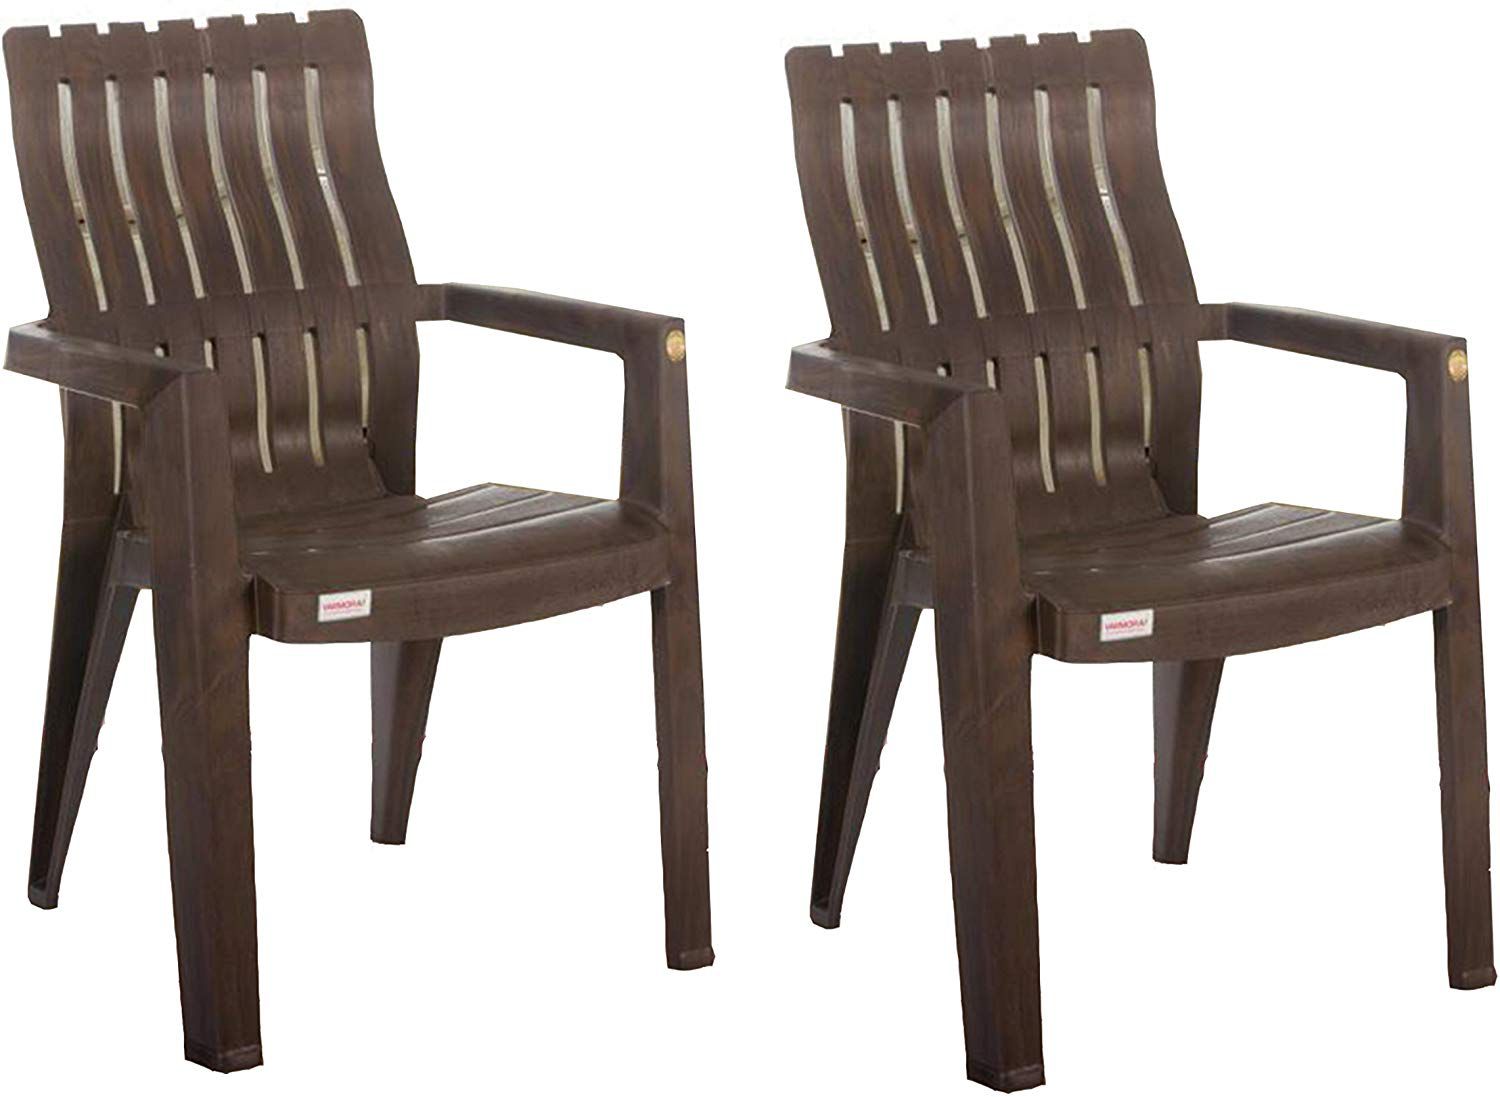 NEELGAGAN Back Support Chair (Wood Colour)- Set of 2 - Buy NEELGAGAN